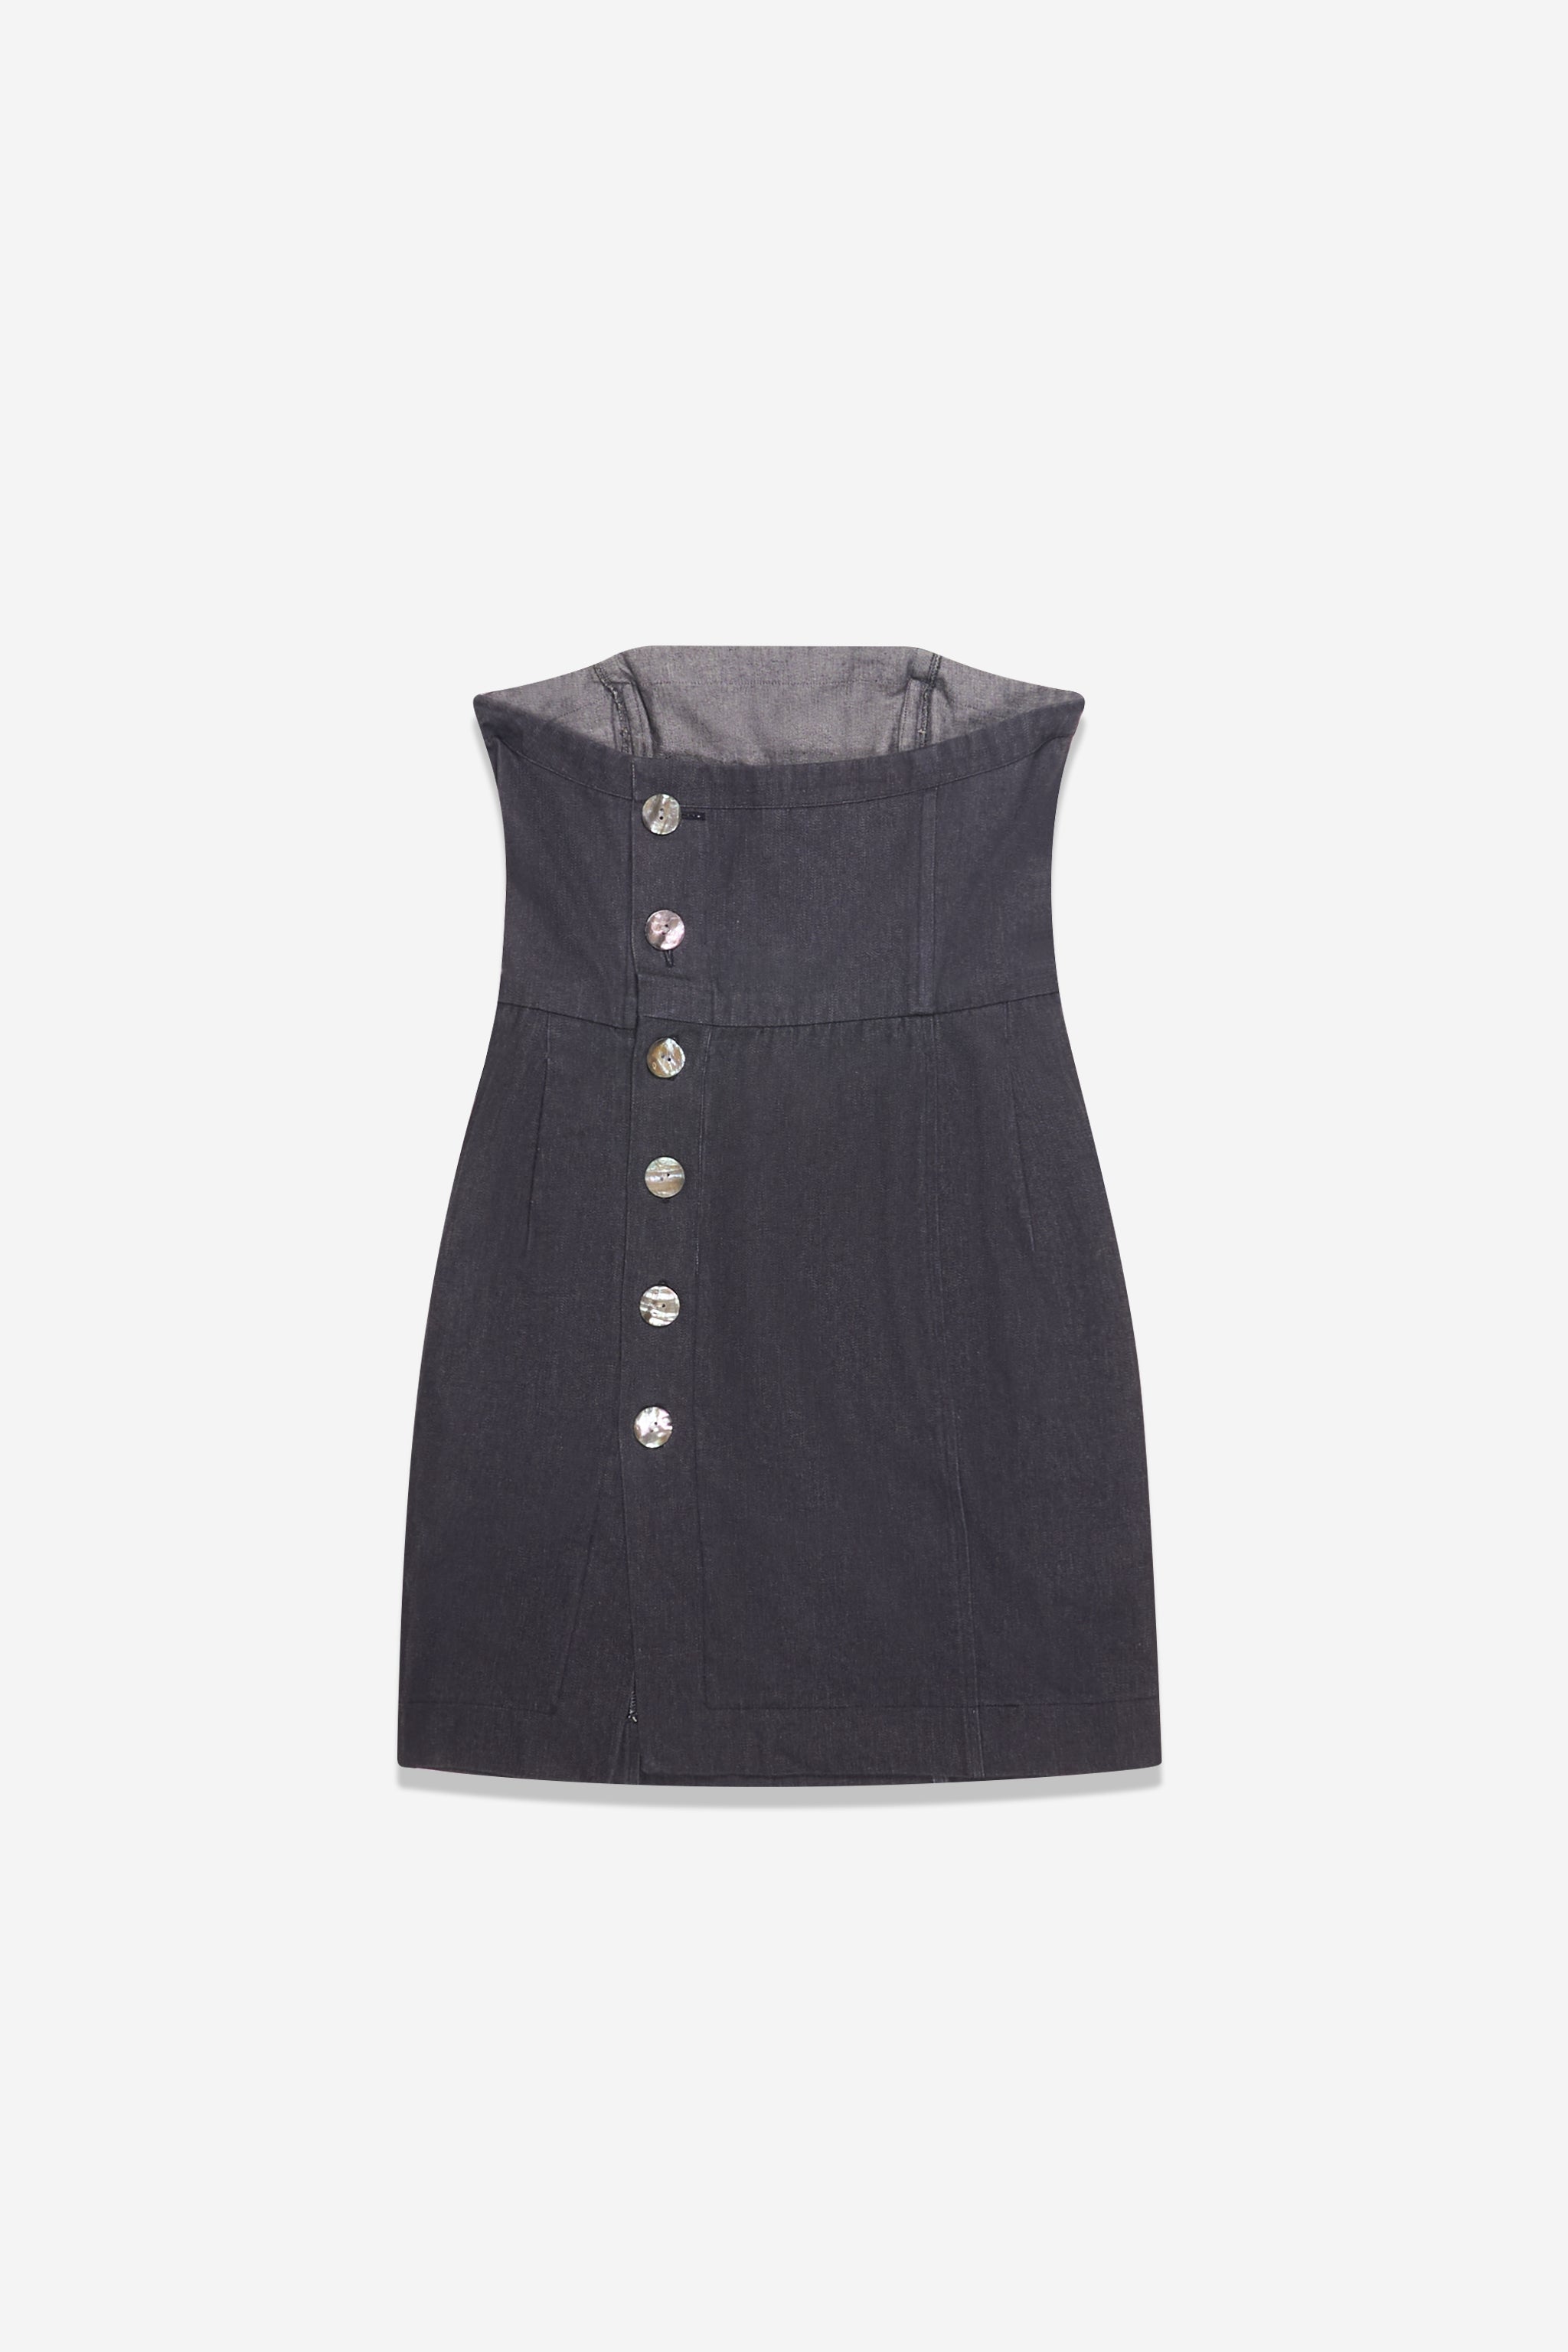 Yves Saint Laurent denim dress